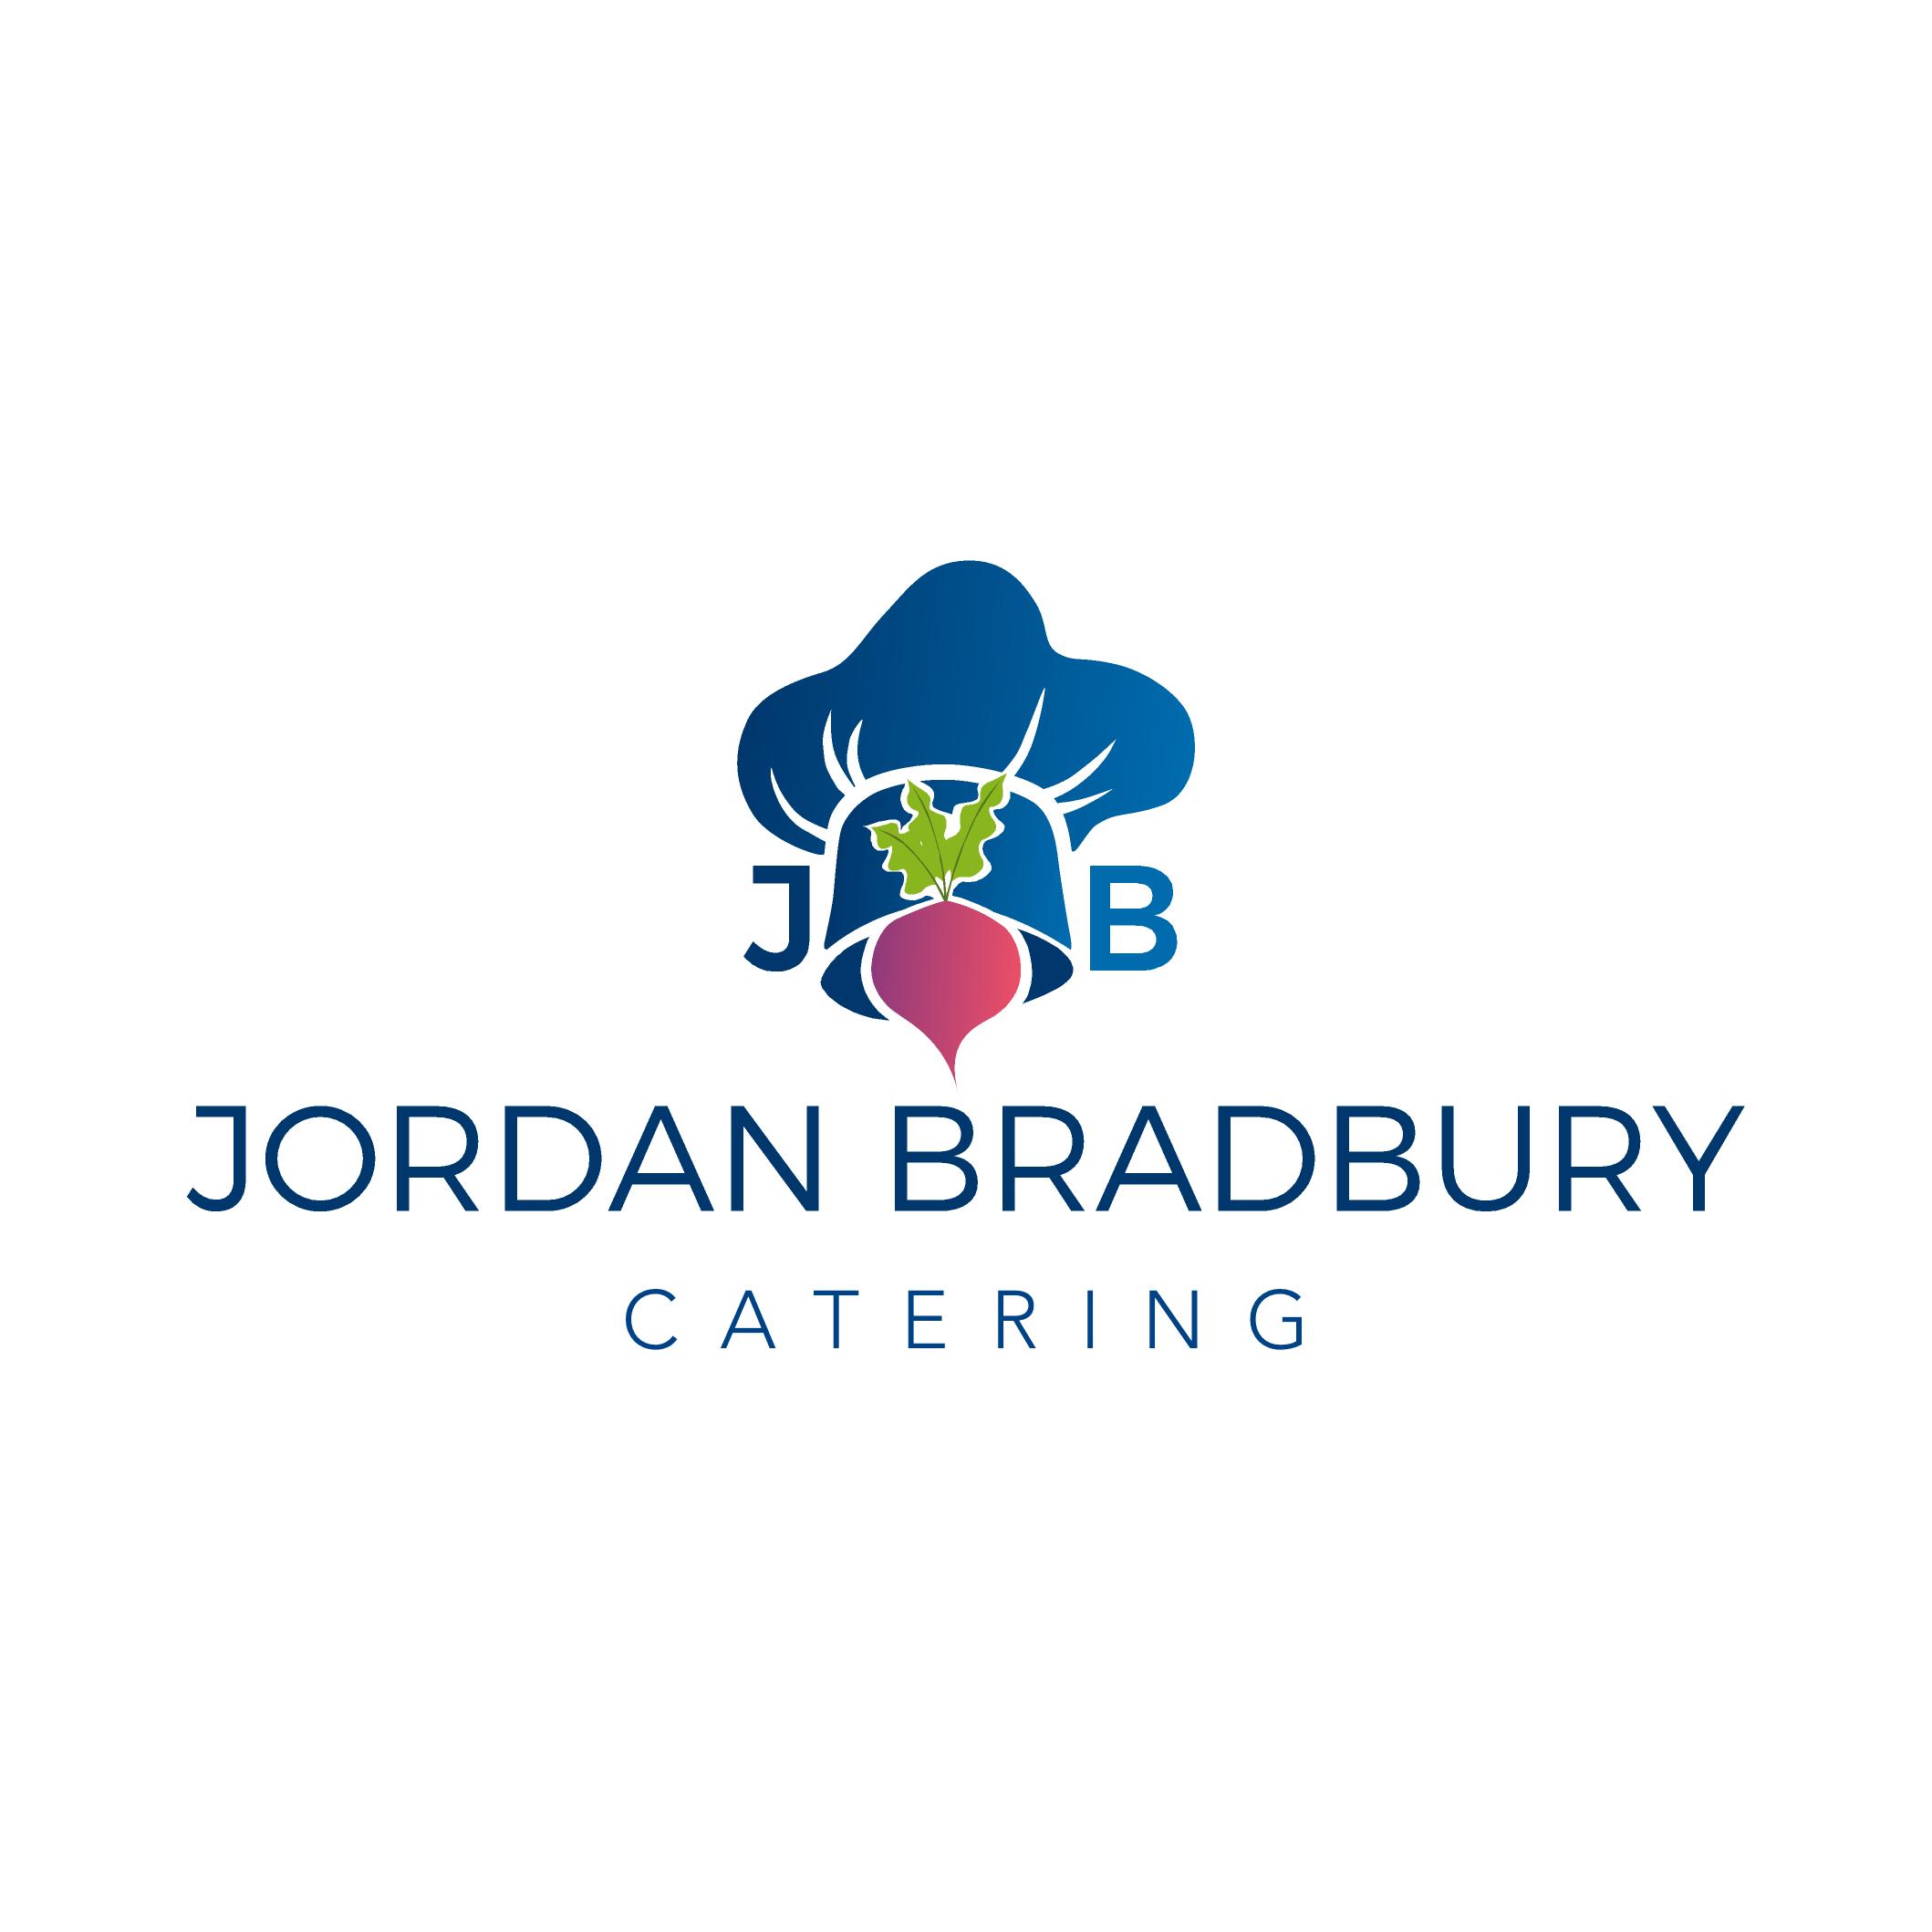 Logo Design entry 1748830 submitted by haye to the Logo Design for Jordan Bradbury Catering  run by Jebradbury